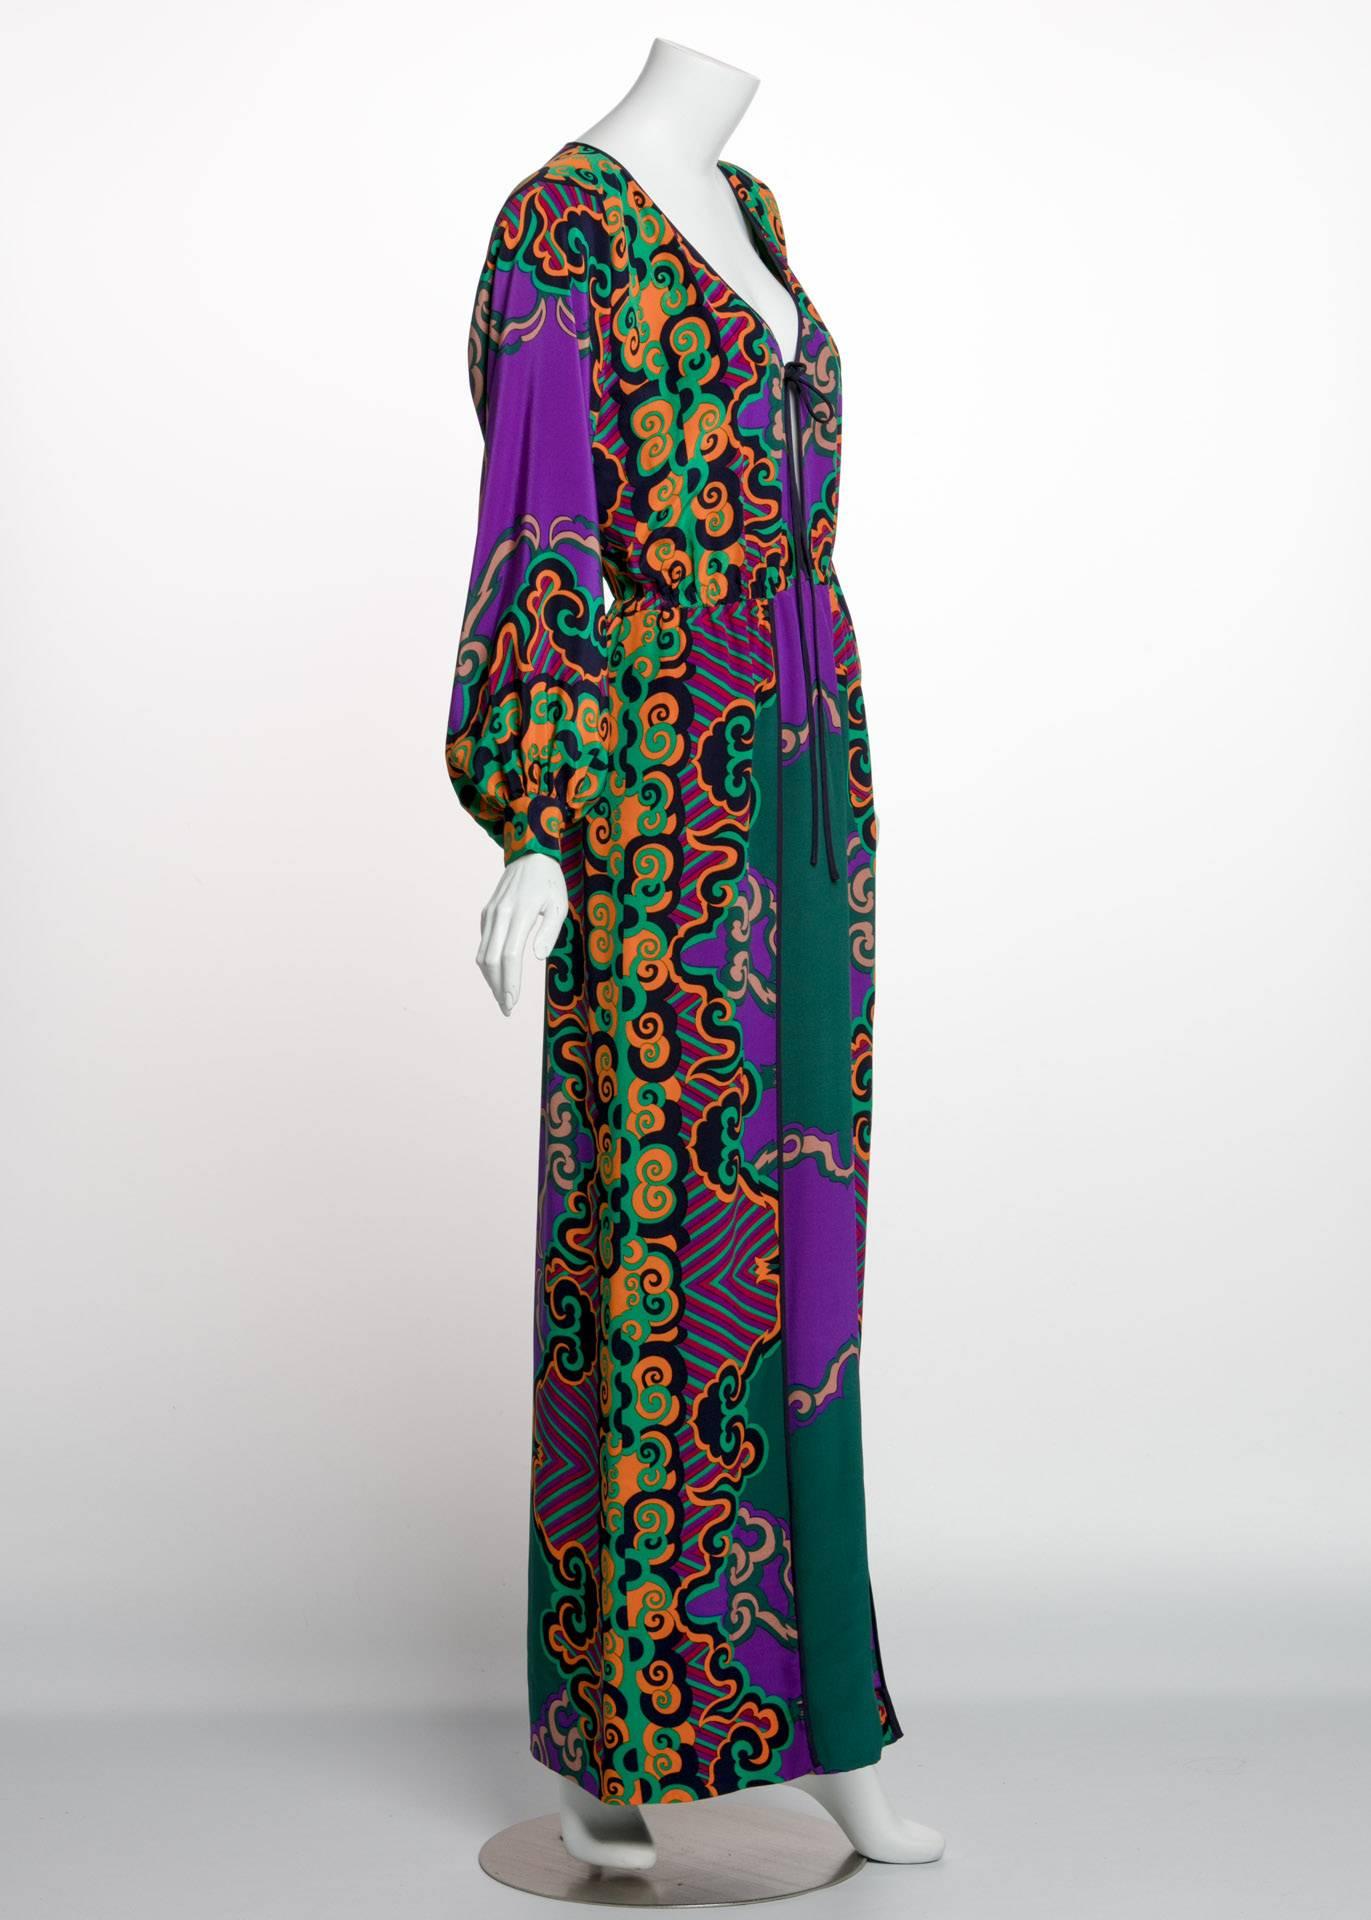 Black James Galanos Couture Emerald Green and Purple Silk Print Dress, 1970s 